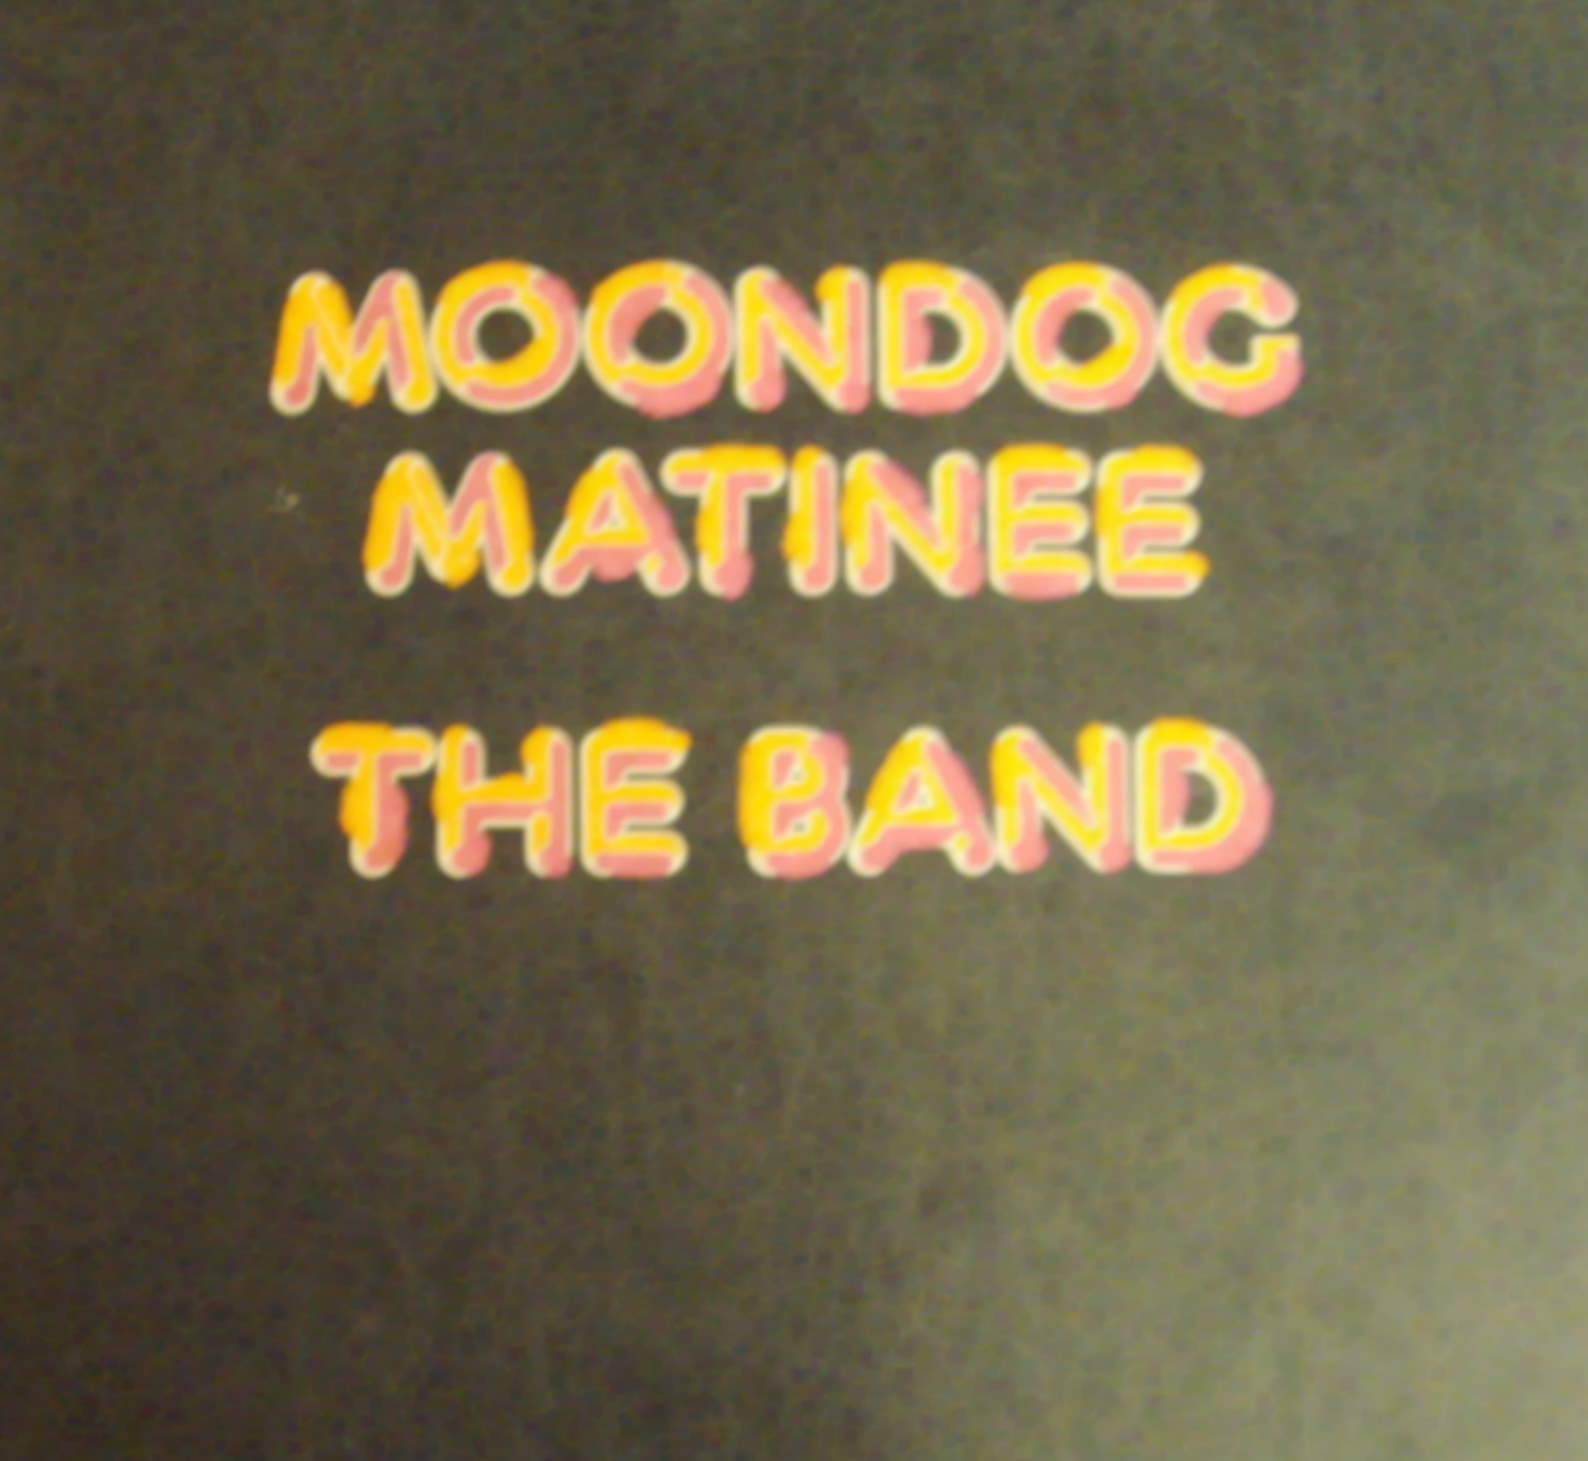 Band / Moondog Matinee